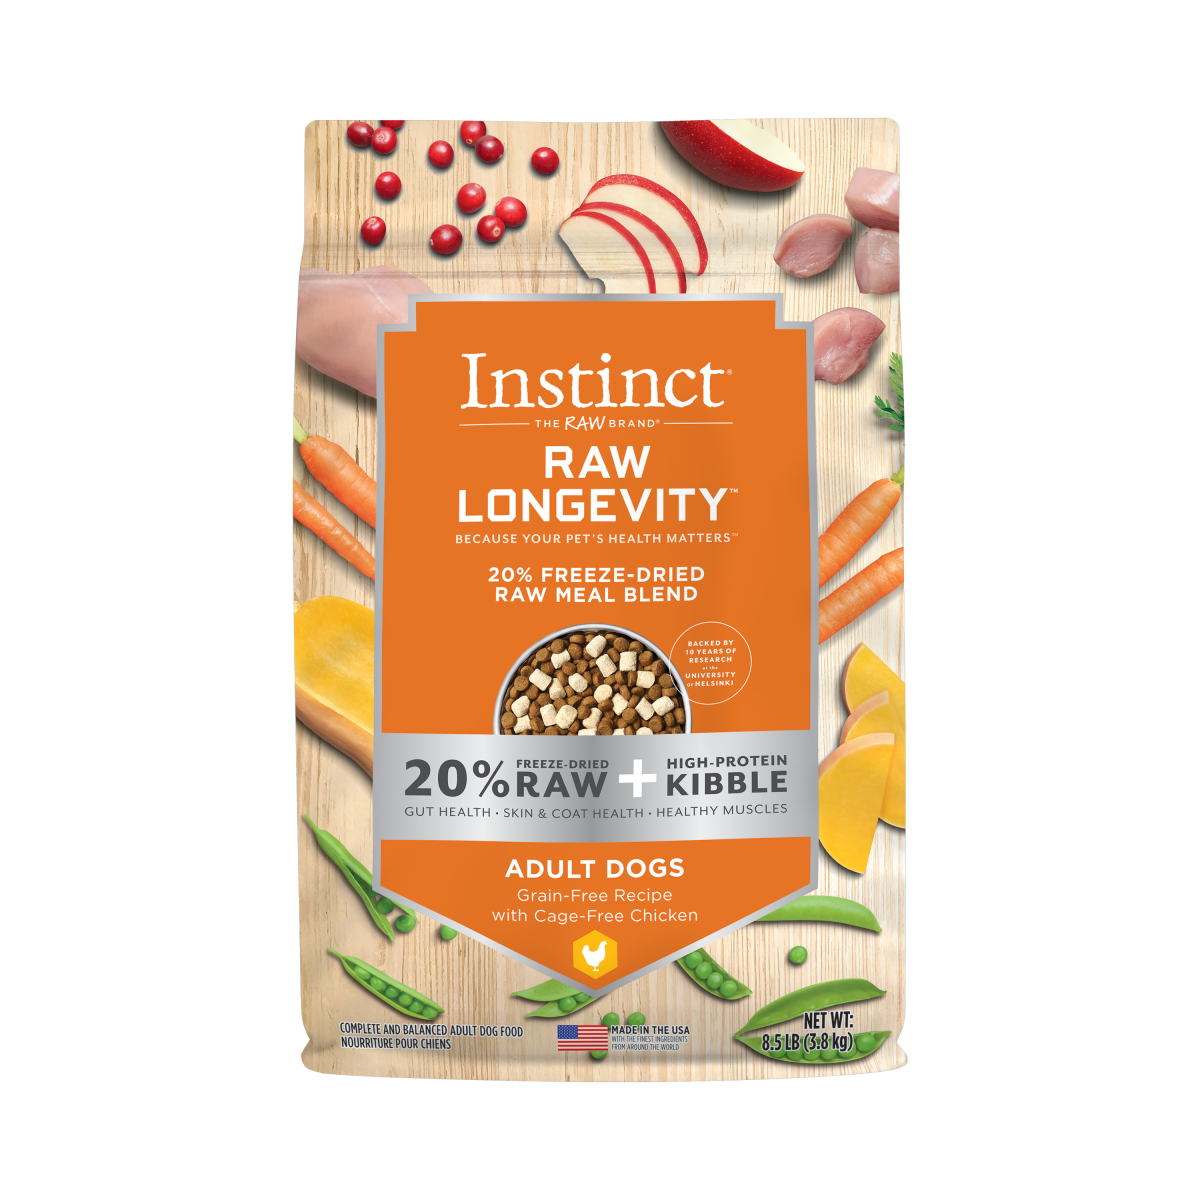 Instinct - Raw Longevity 20% Freeze-Dried Raw Meal Blend Cage-Free Chicken Recipe